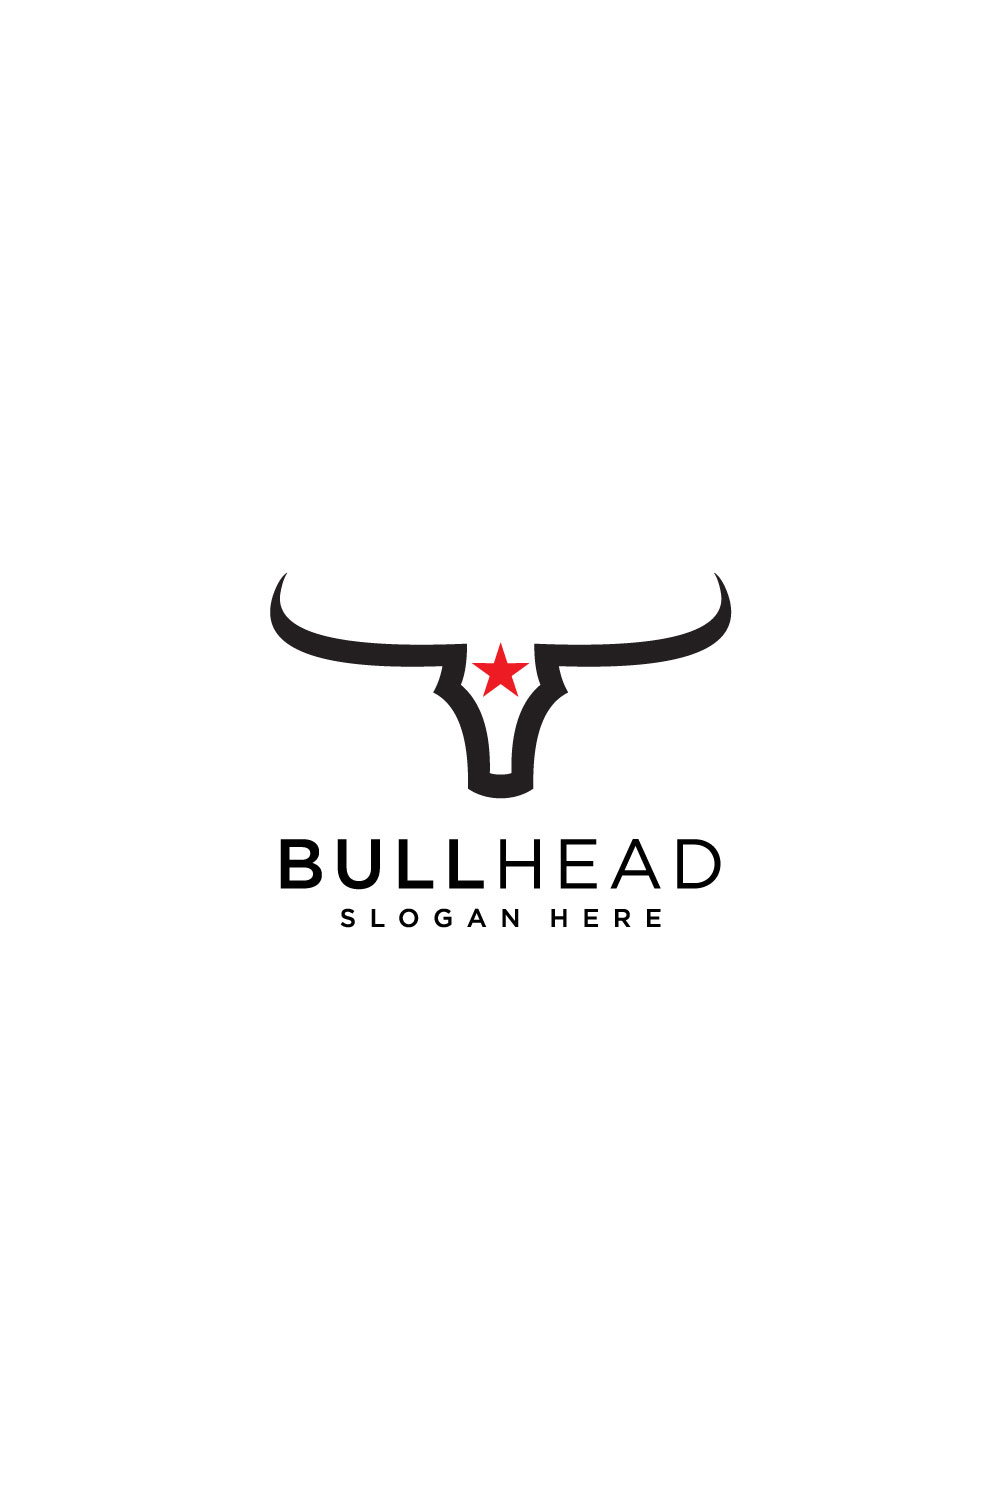 bull head logo design template vector pinterest preview image.